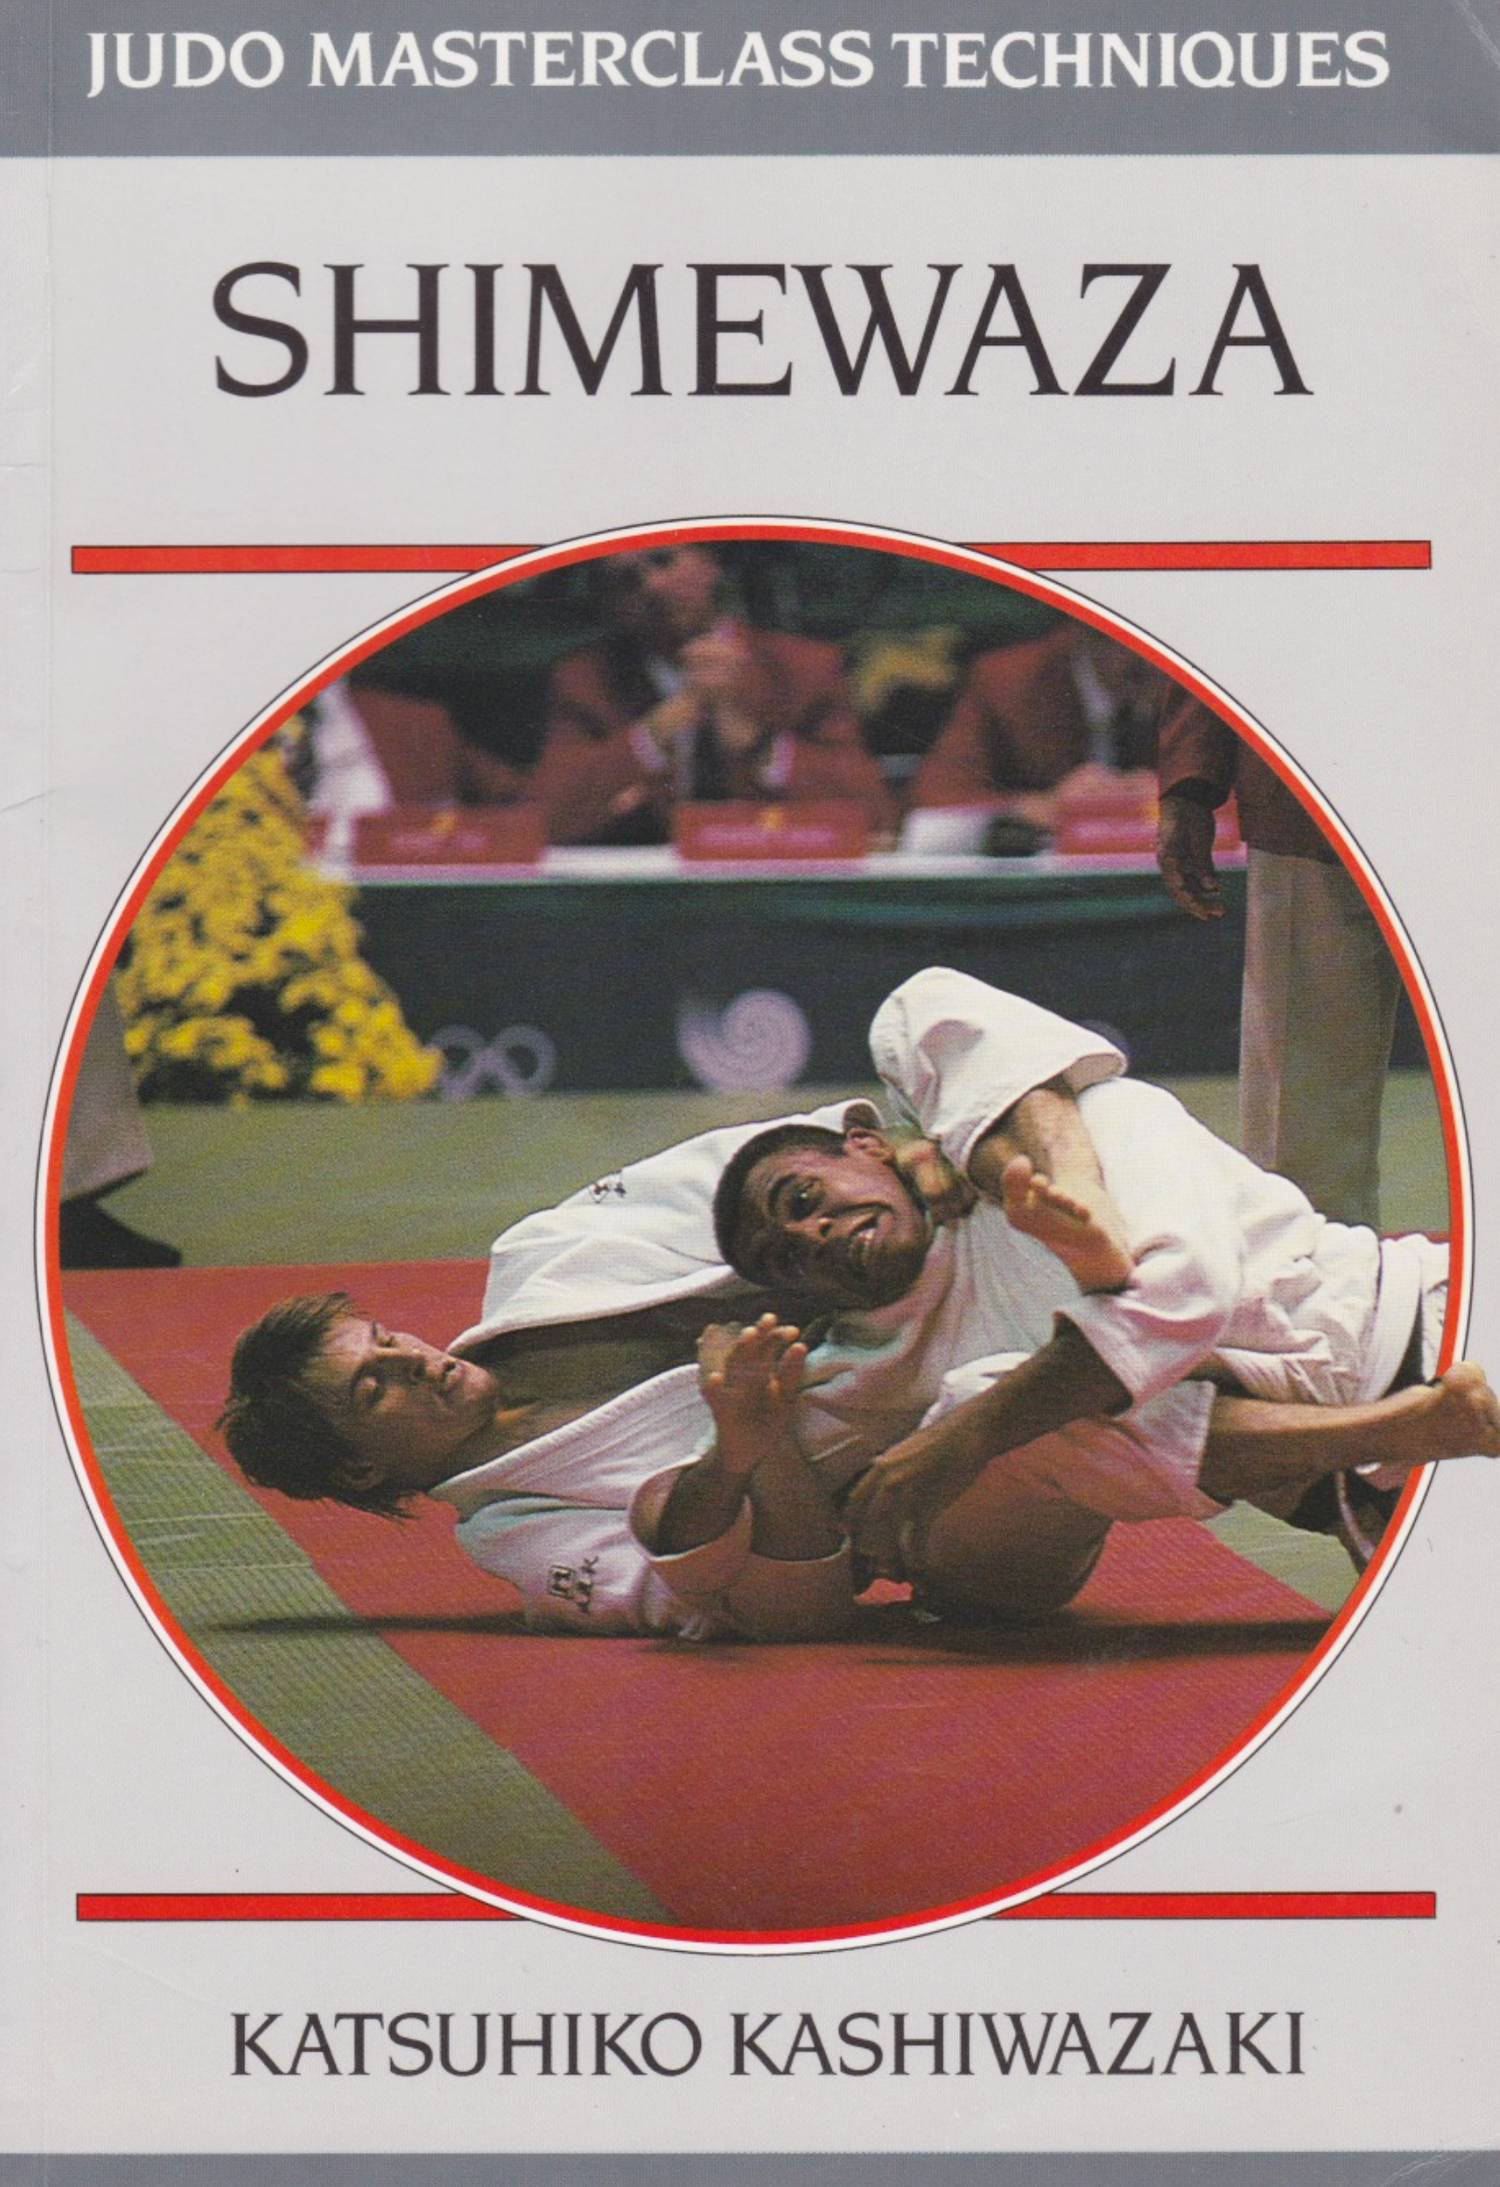 Shimewaza: Judo Masterclass Book by Katsuhiko Kashiwazaki (Preowned) - Budovideos Inc